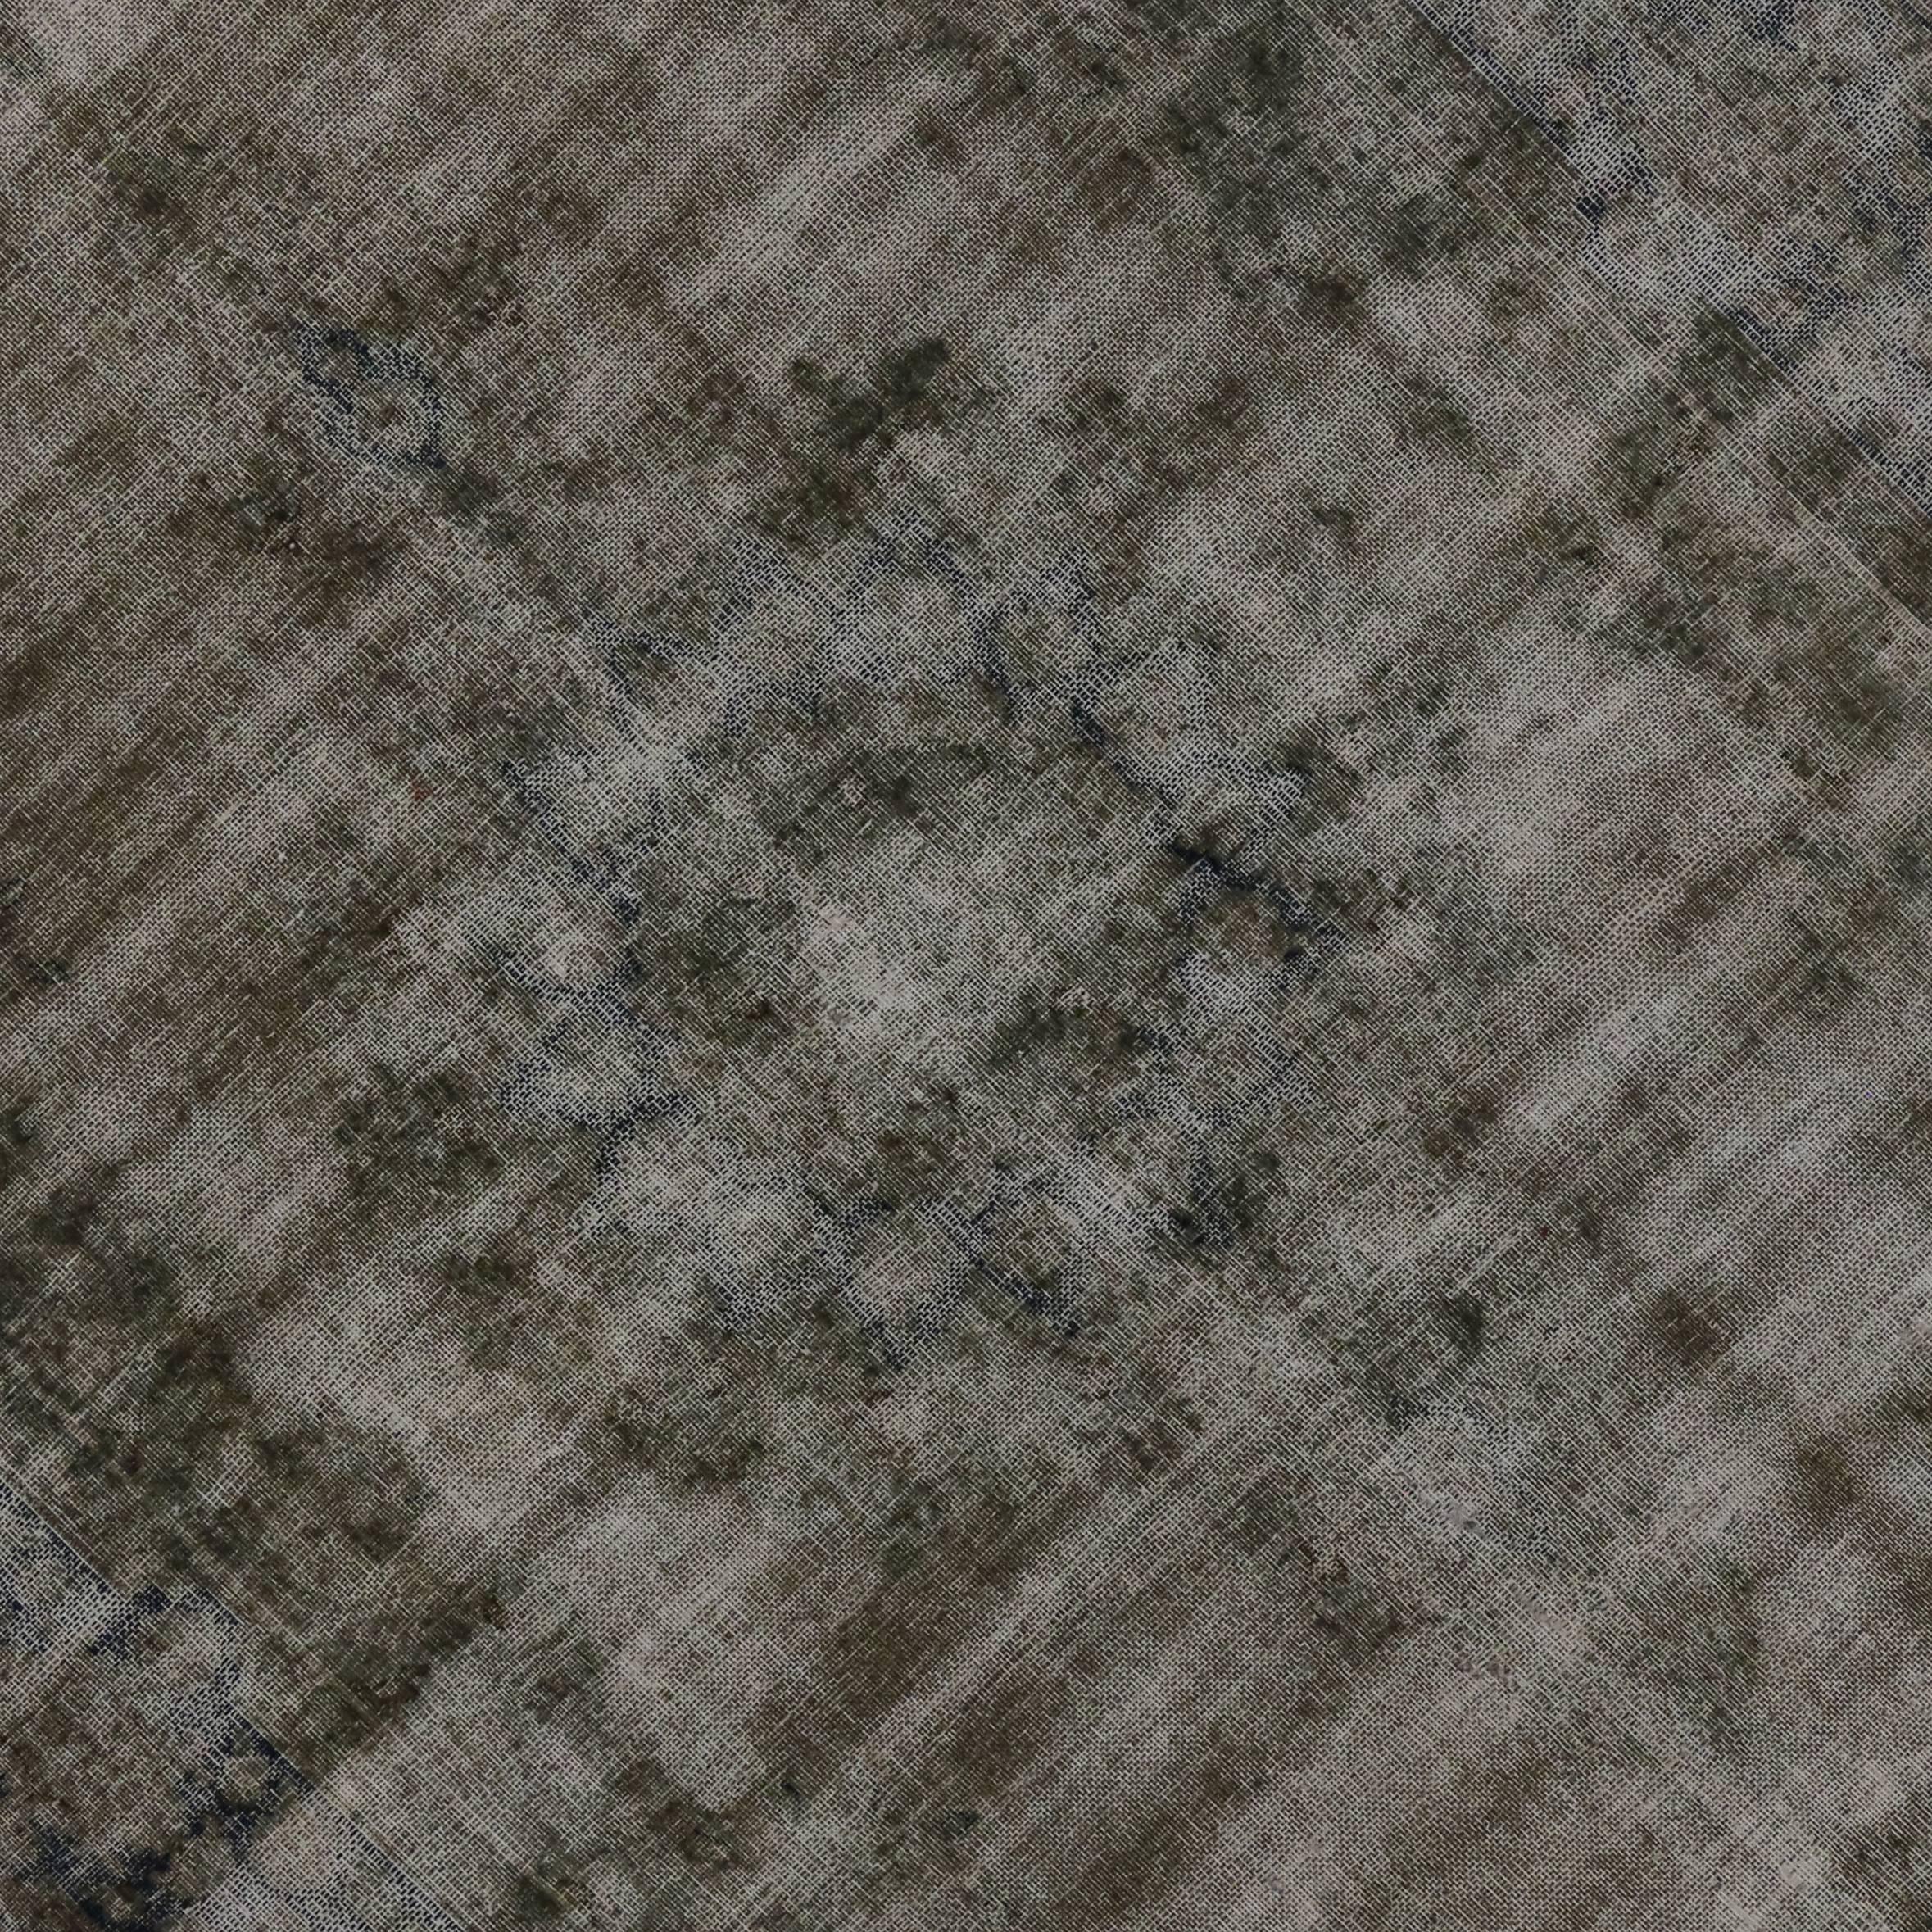 industrial style rug